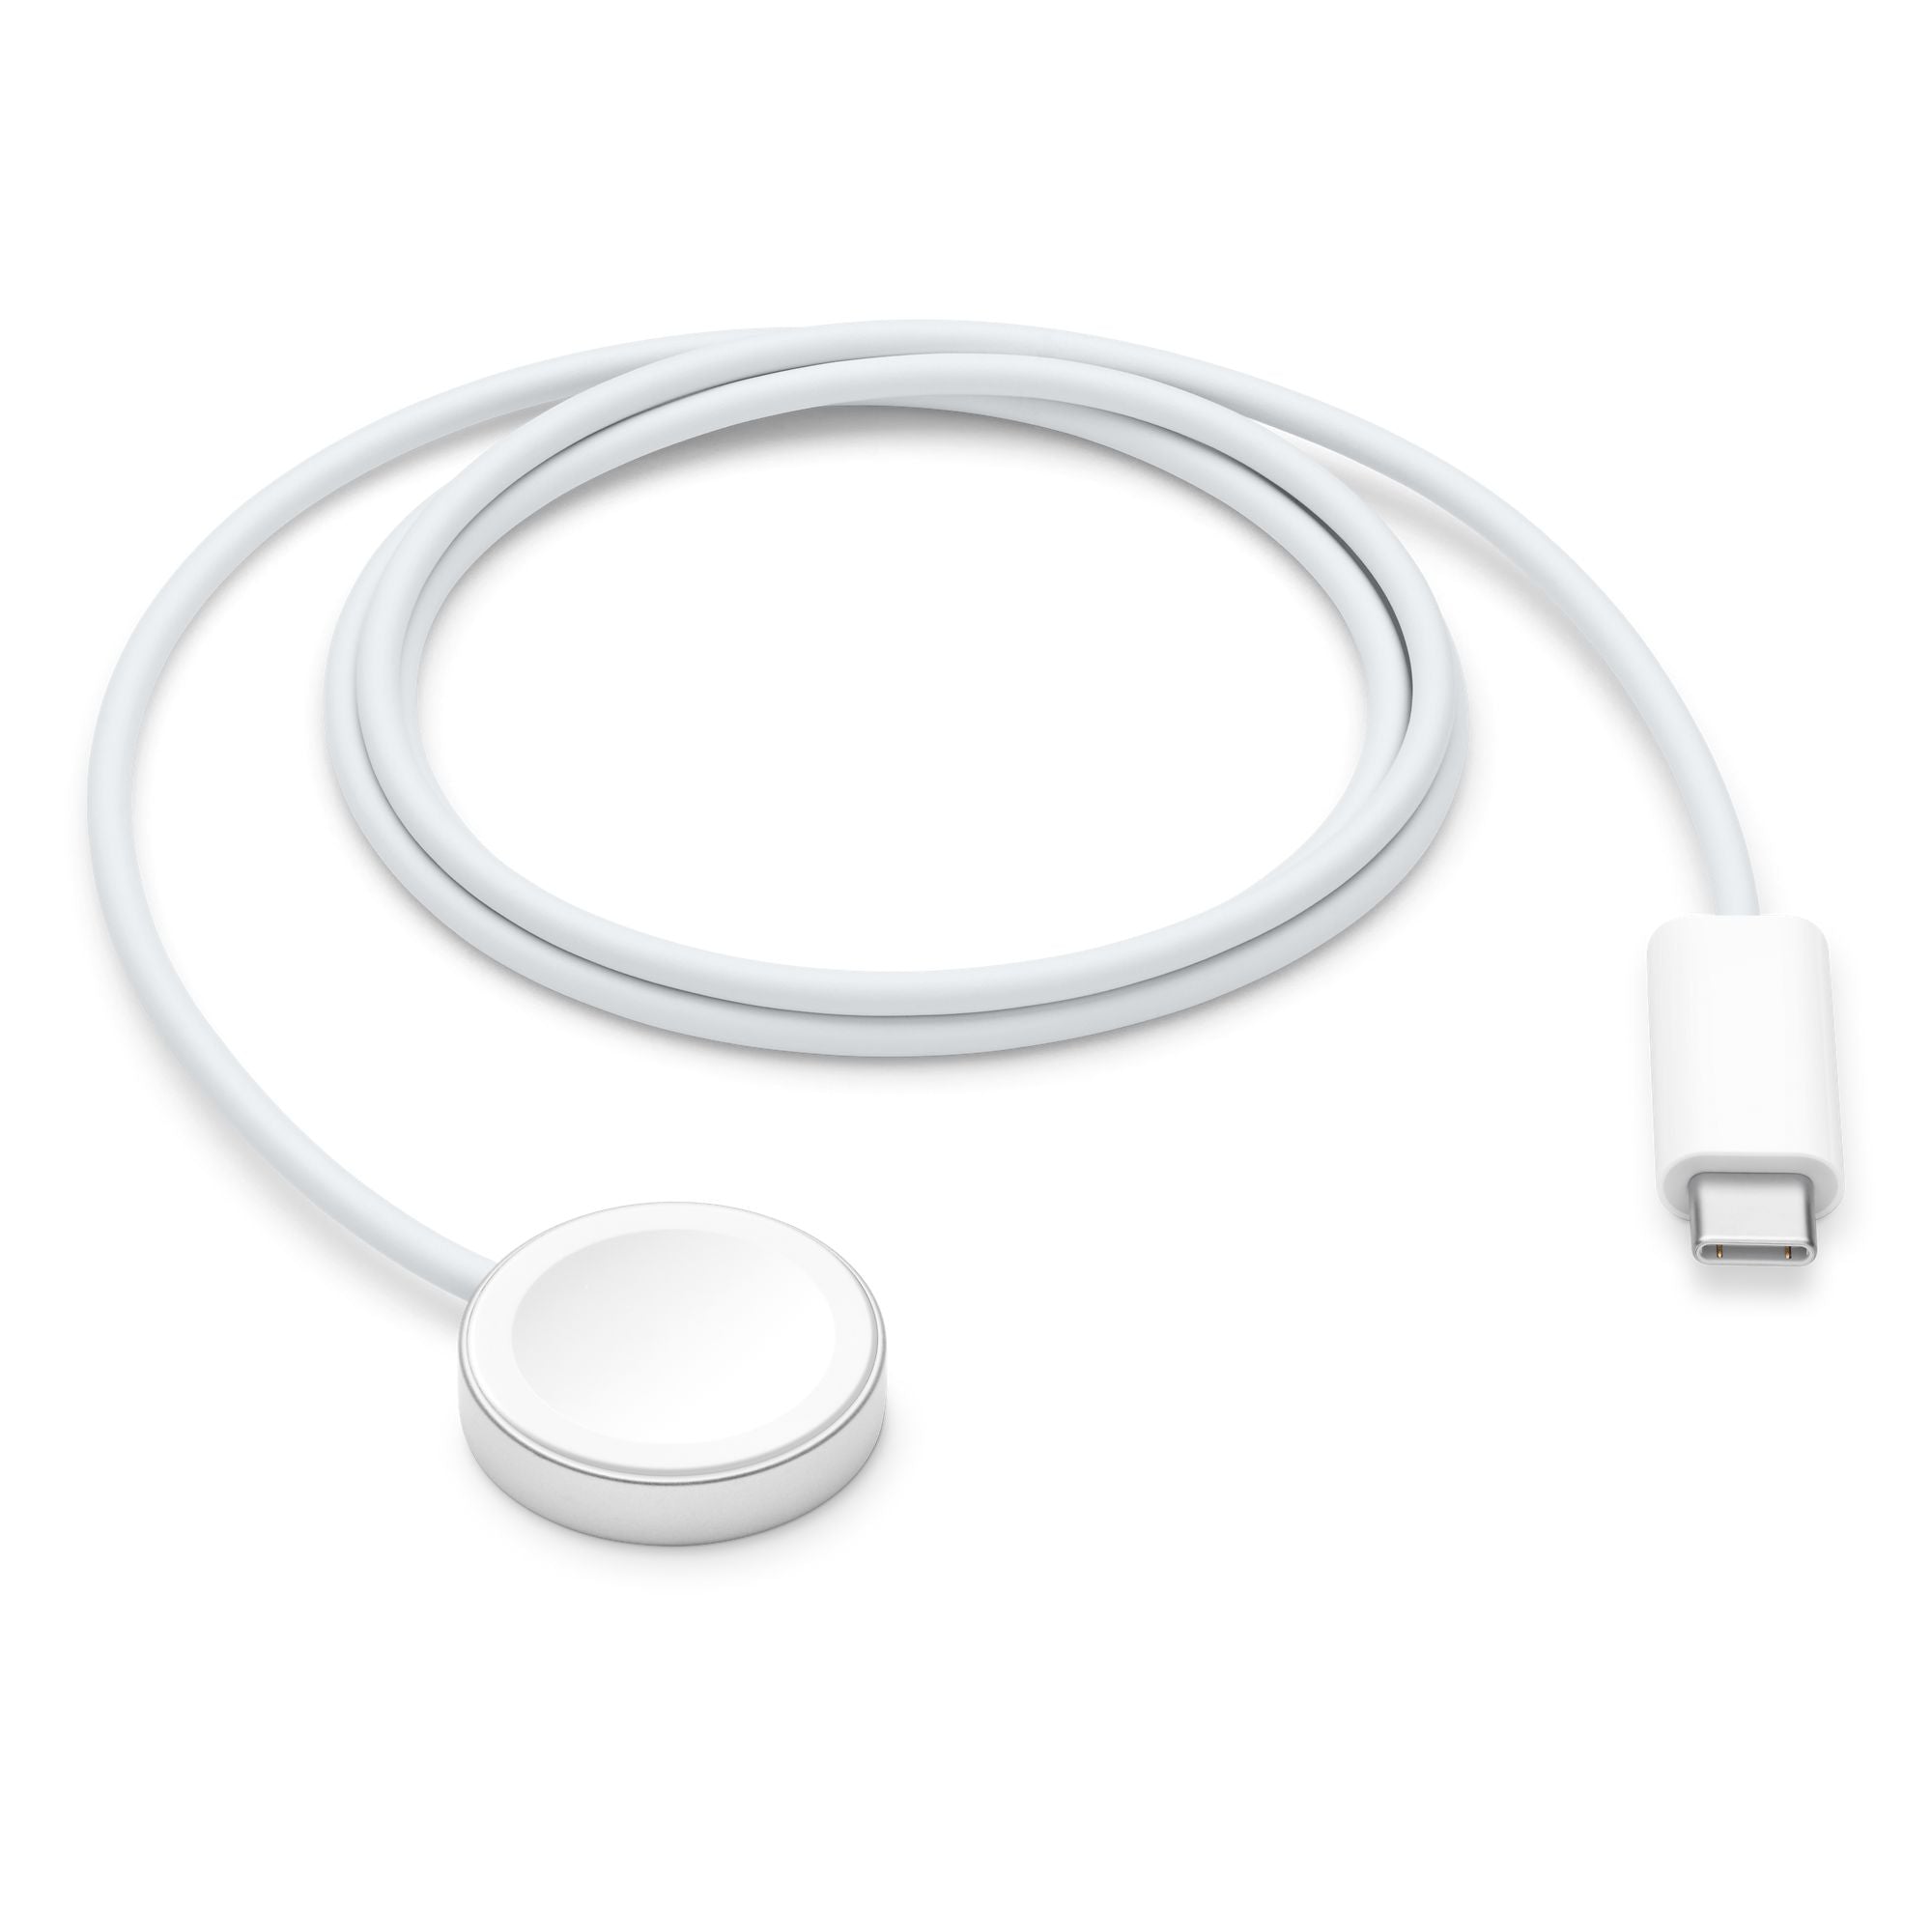 Cable Cargador Apple Tipo C, Iphone, Macbook Pro, iPad Pro 11 Apple Cable  Cargador Apple Tipo C